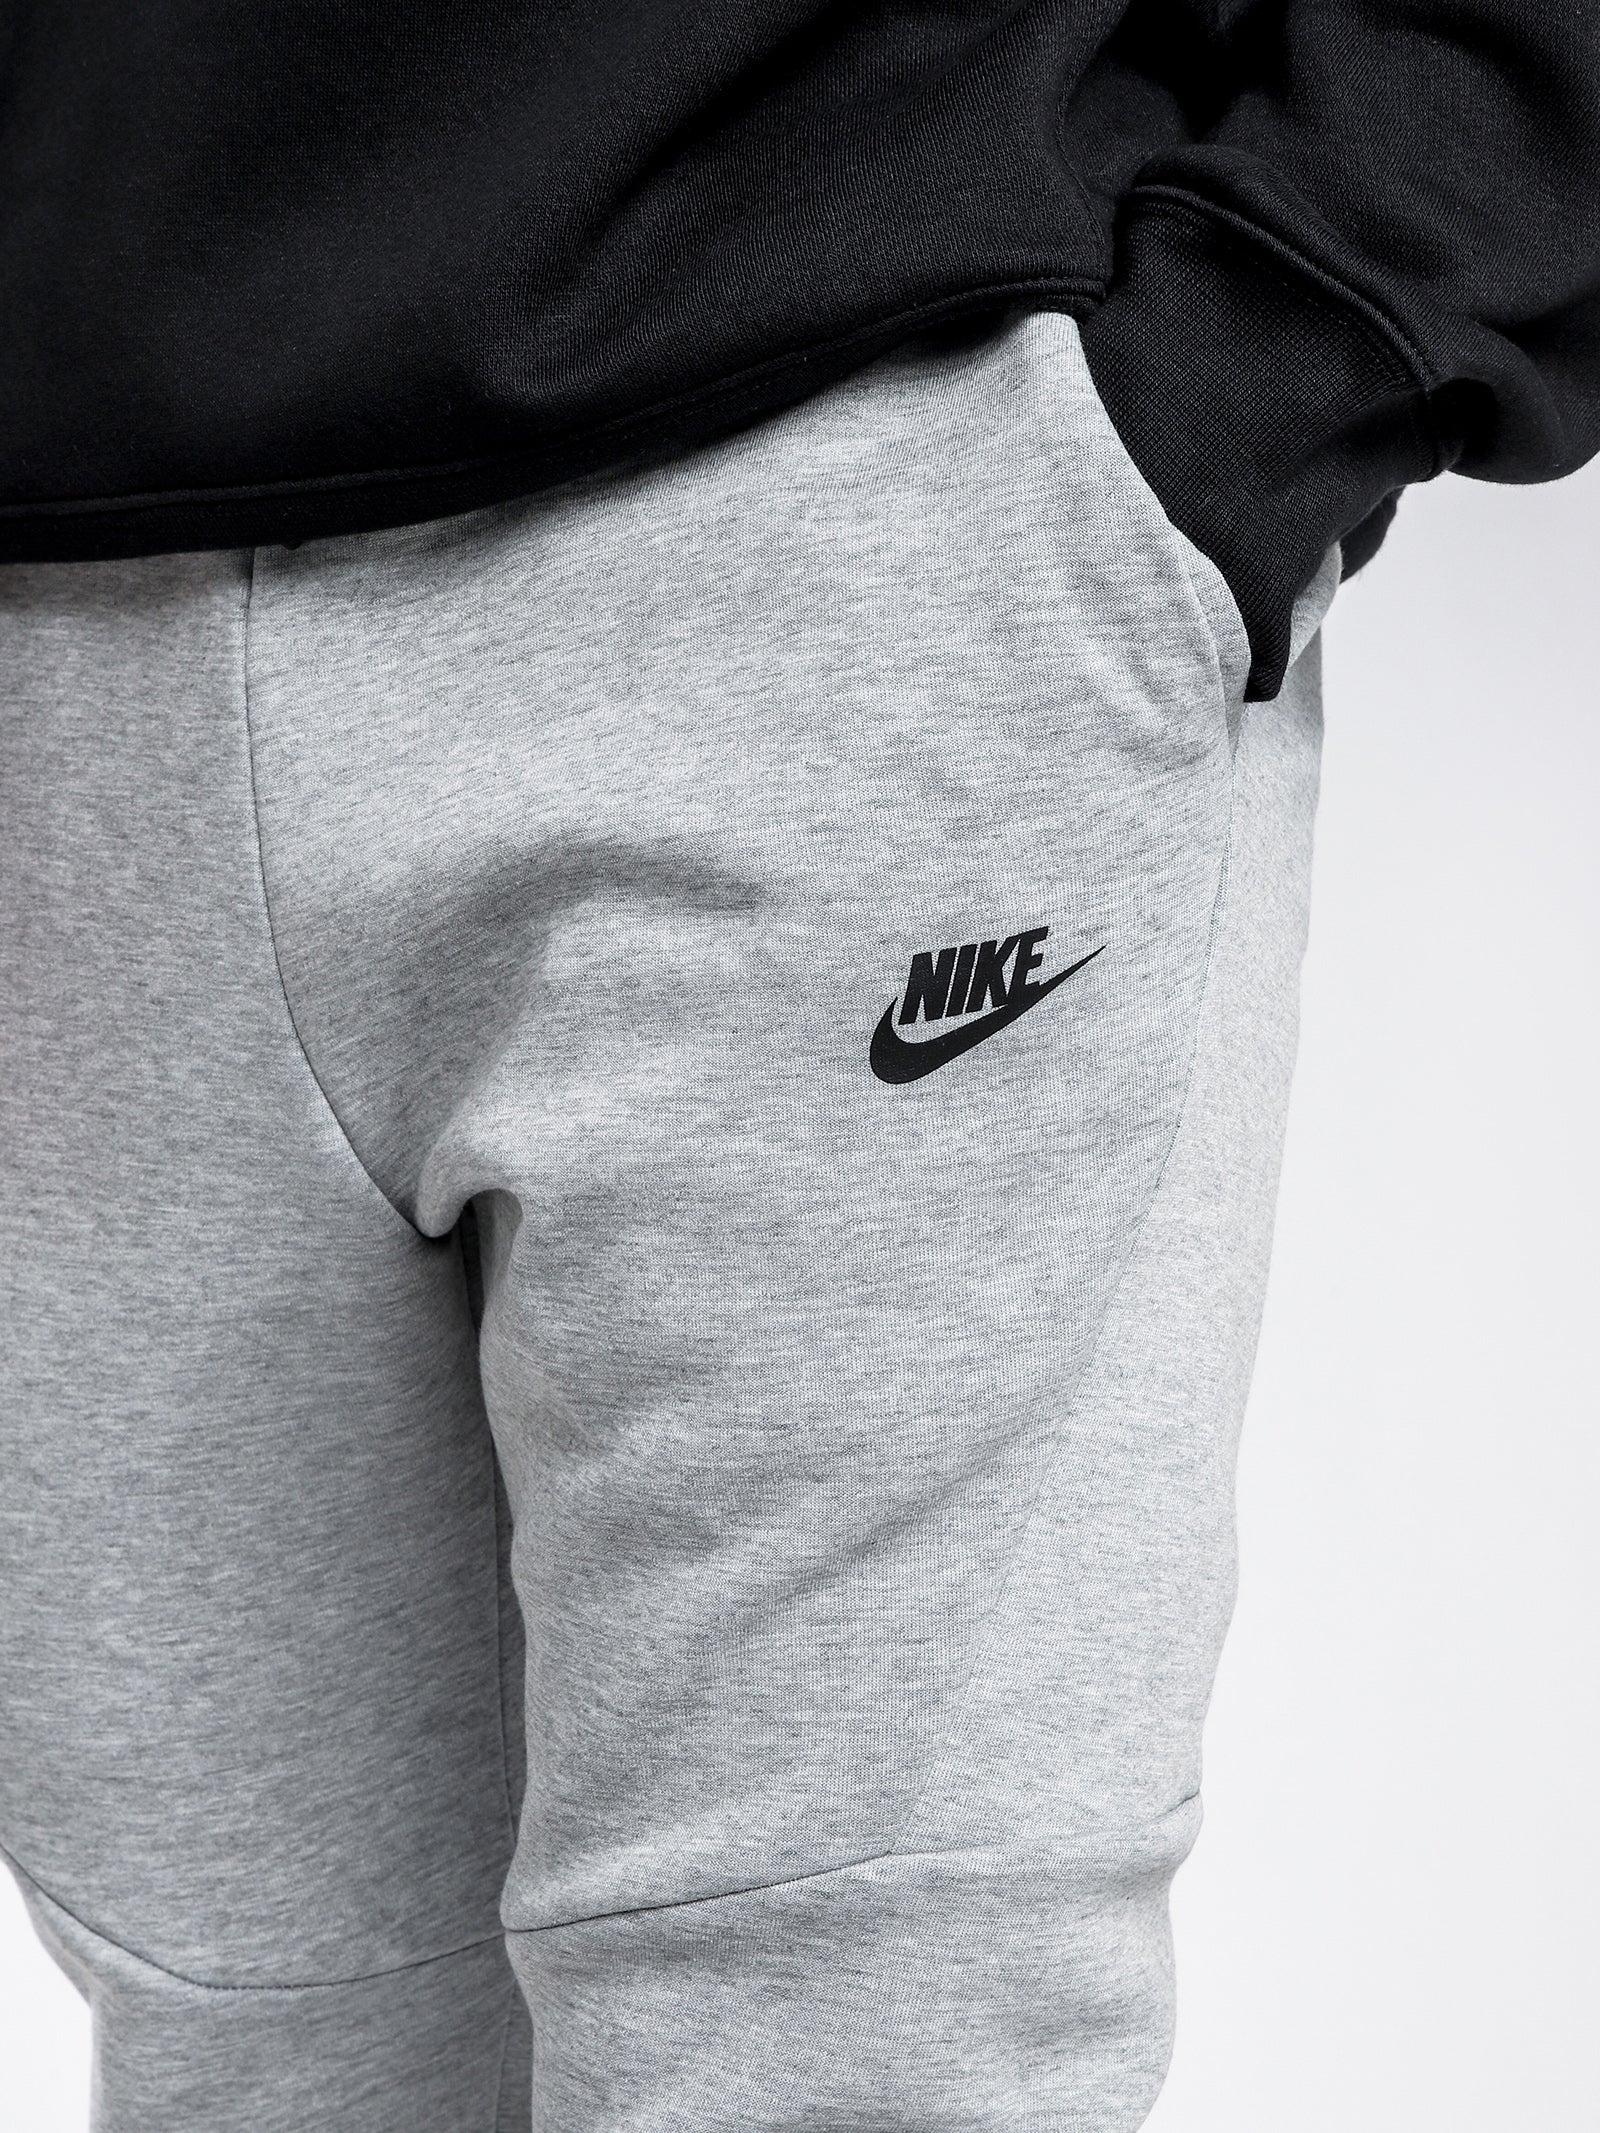 Nike Tech Fleece Joggers Size Large Men's Grey Old Season 805162